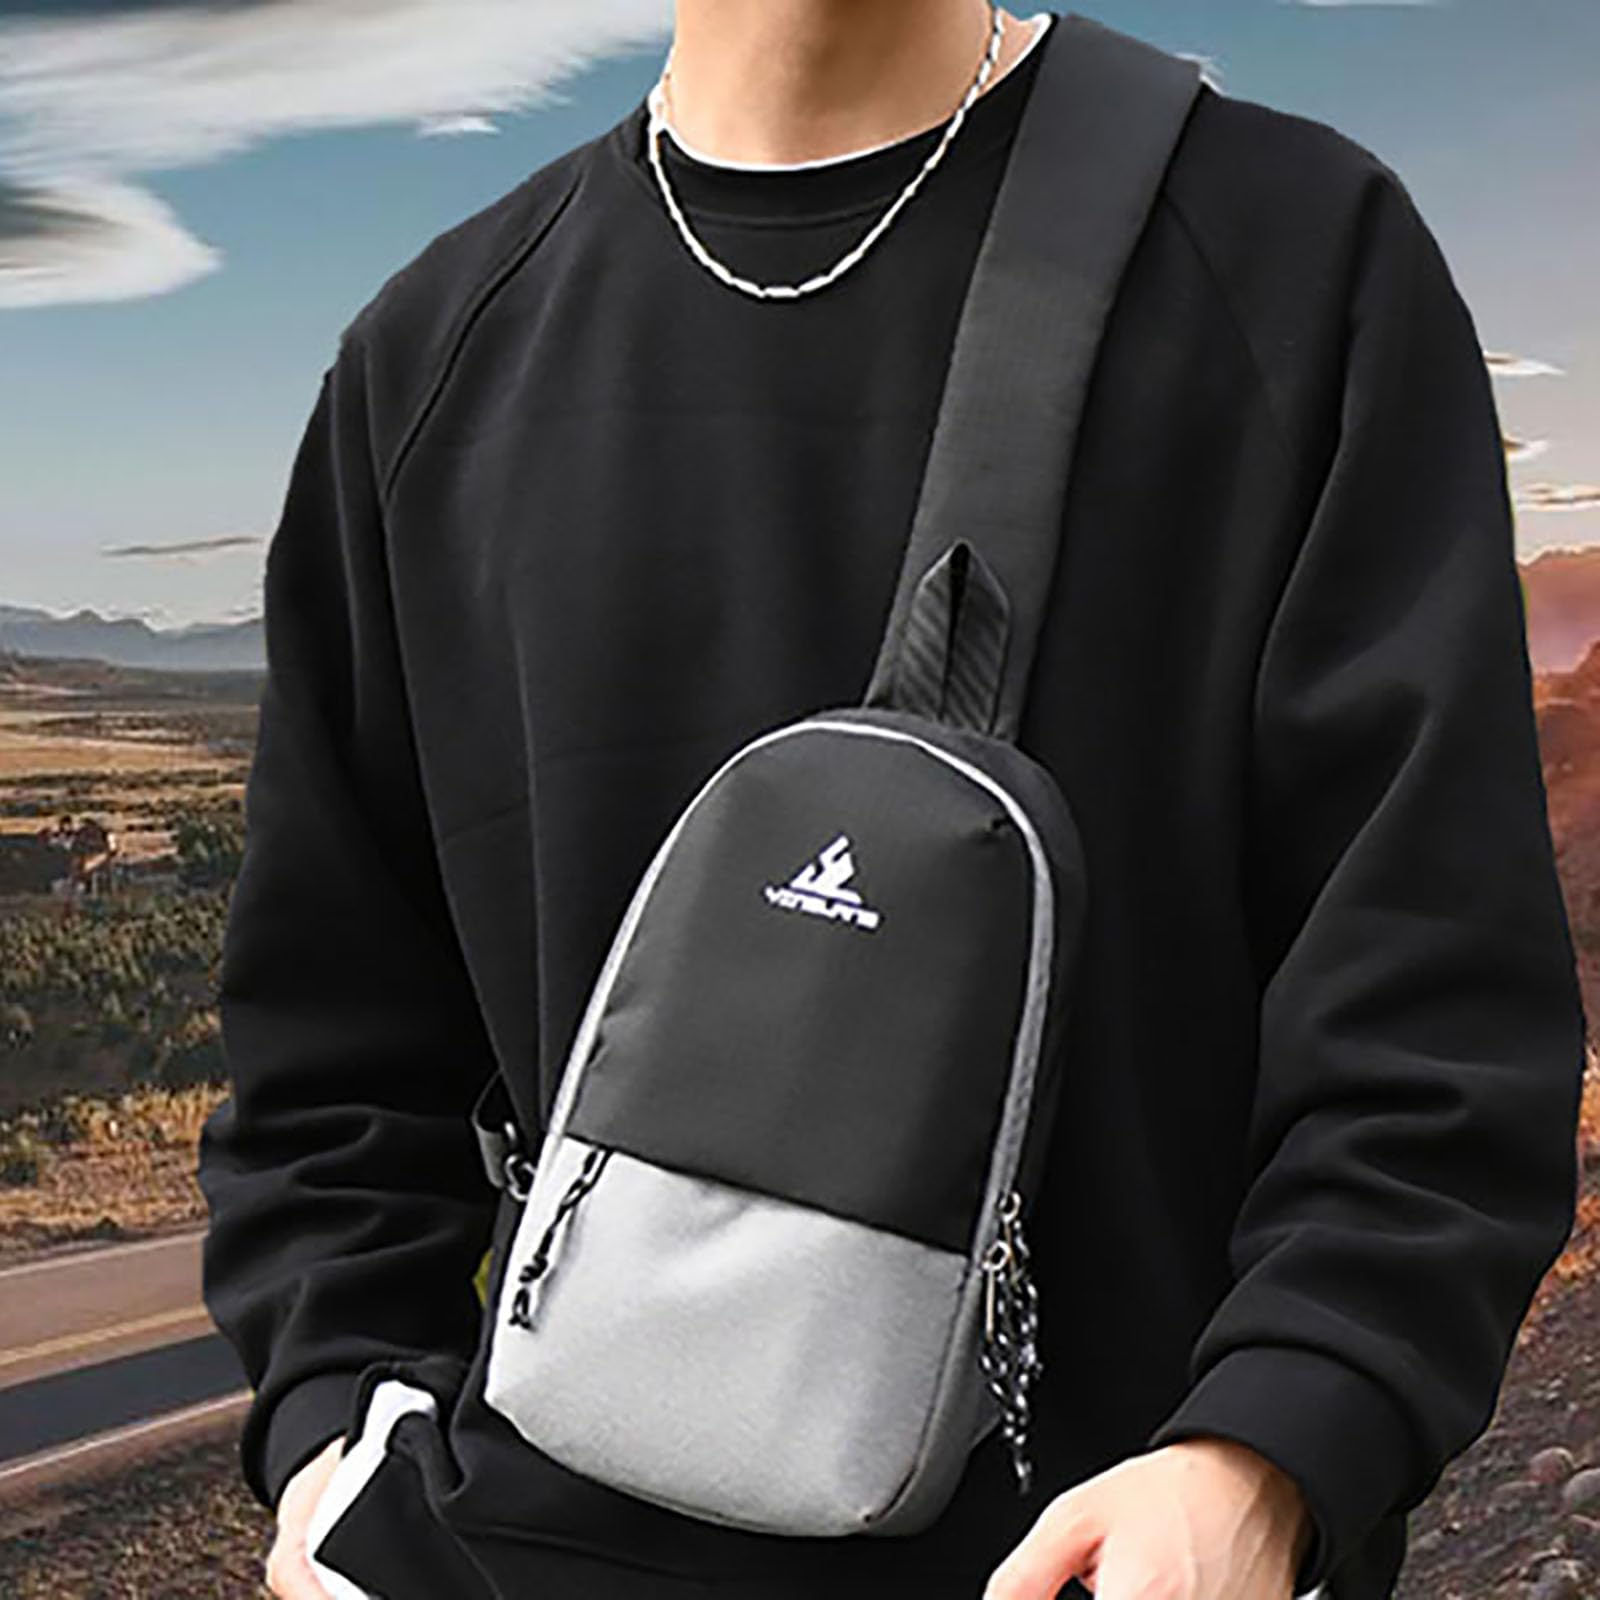 immoono Small Sling Backpack Unisex Shoulder Bag, Sling Bag Crossbody Purse for Women, Mens Crossbody Bag, Black